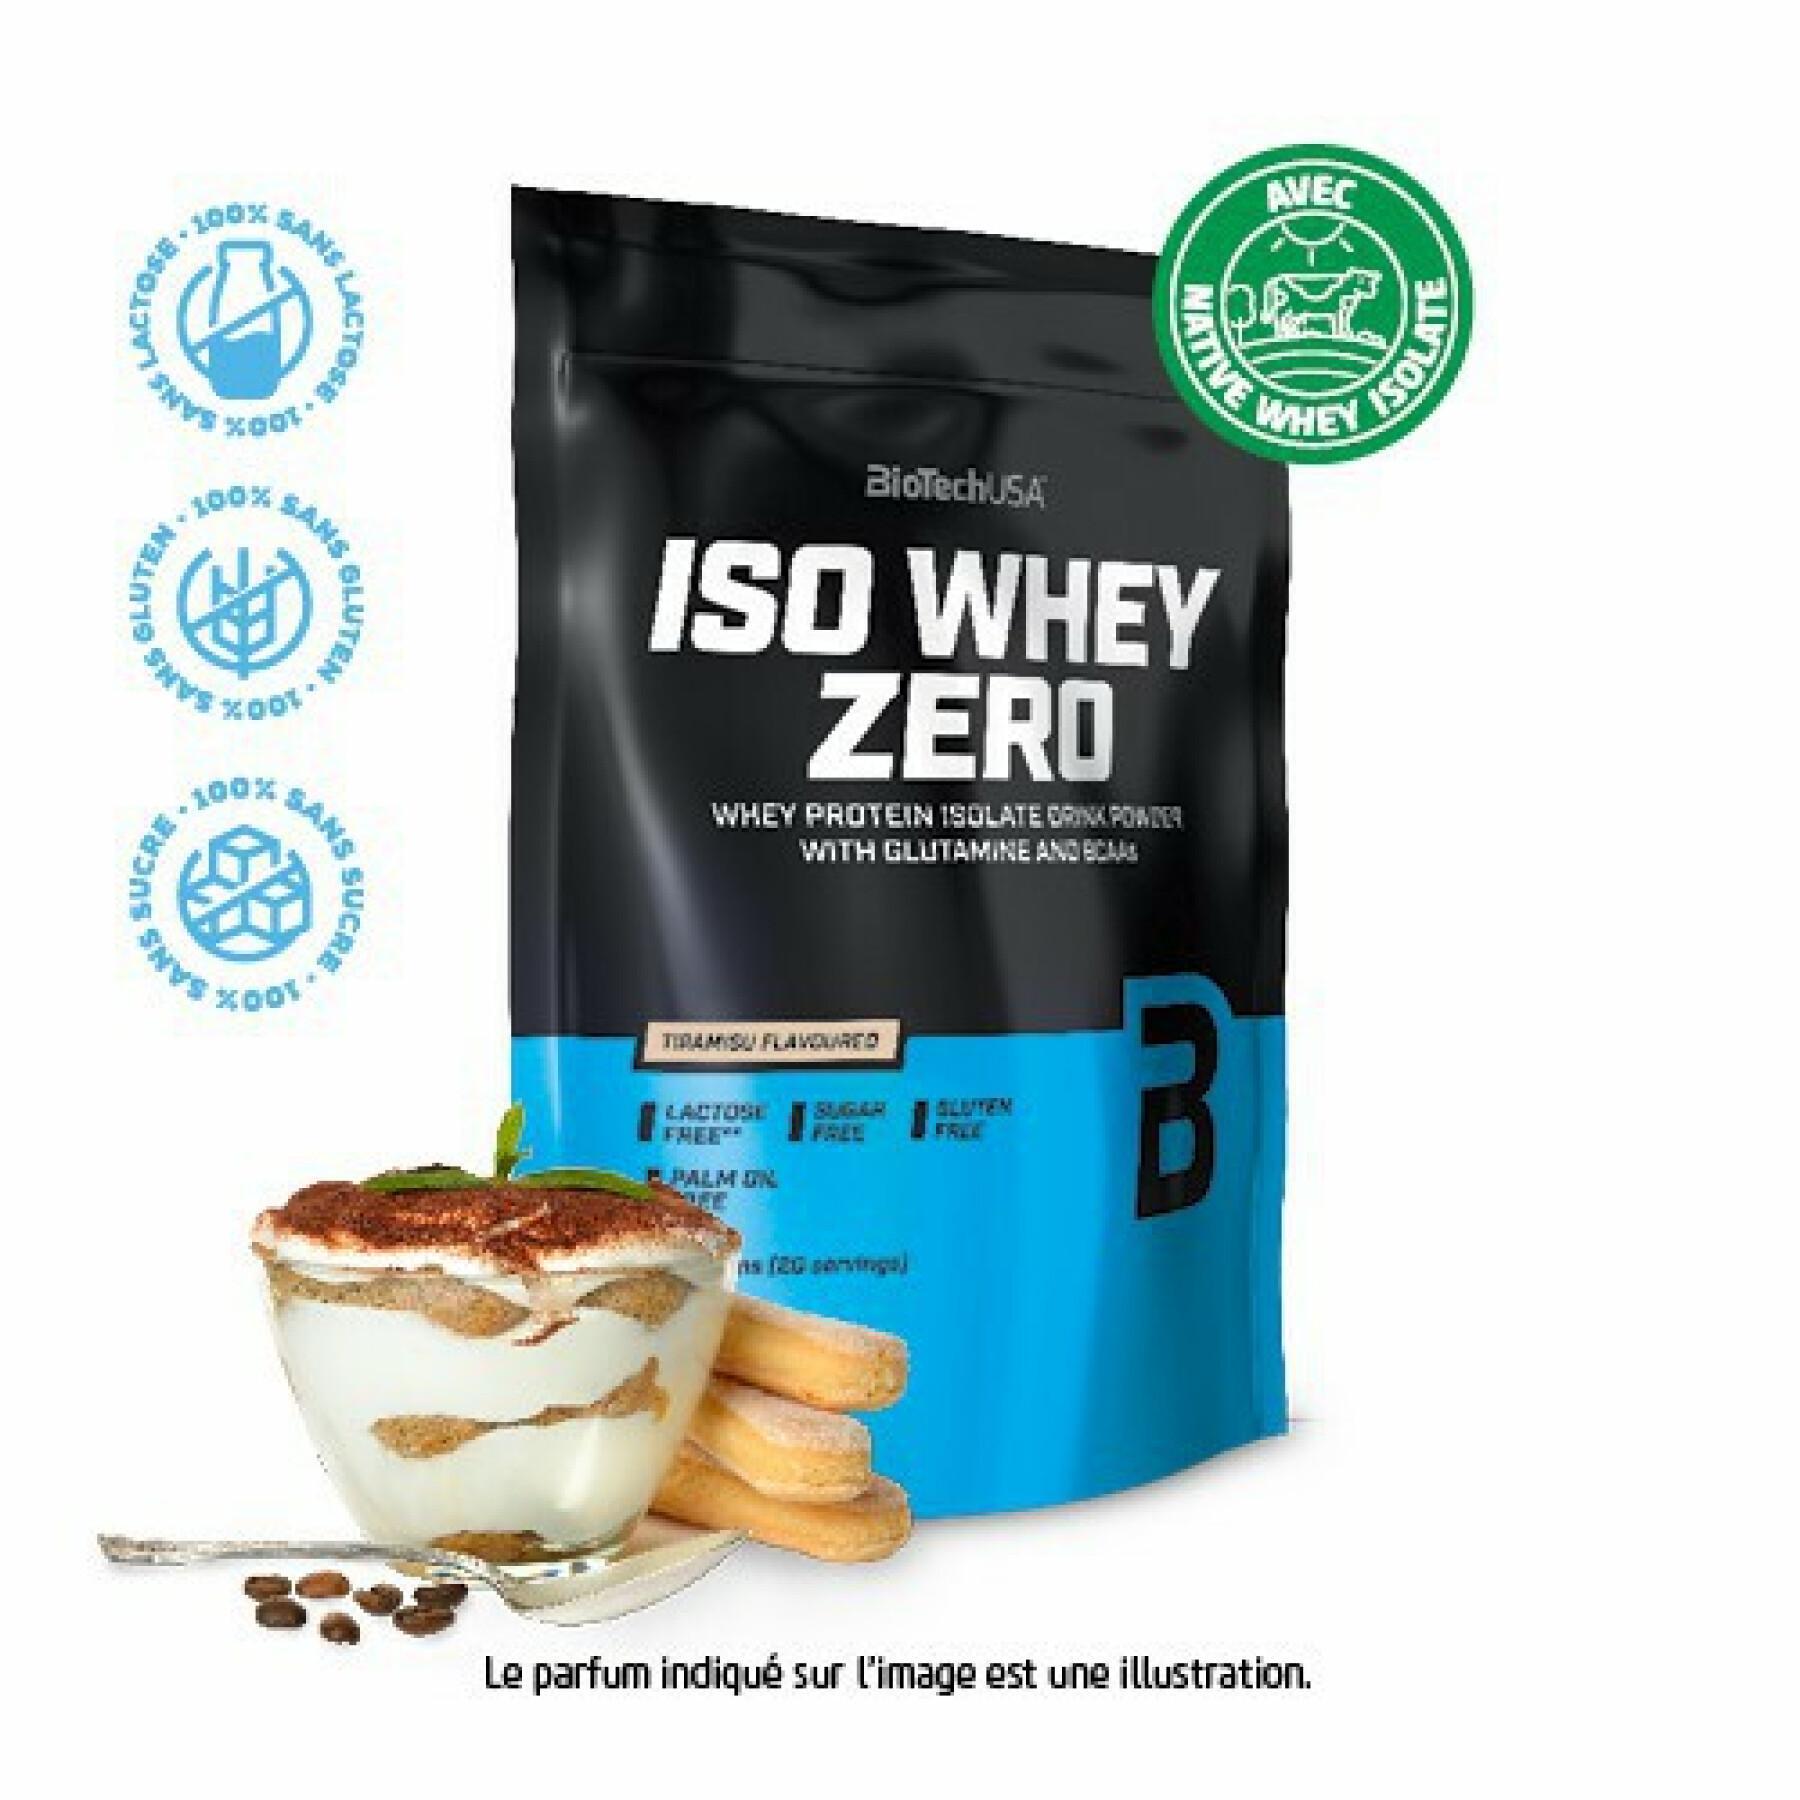 Lot de 10 sacs de protéines Biotech USA iso whey zero lactose free - Tiramisu - 500g